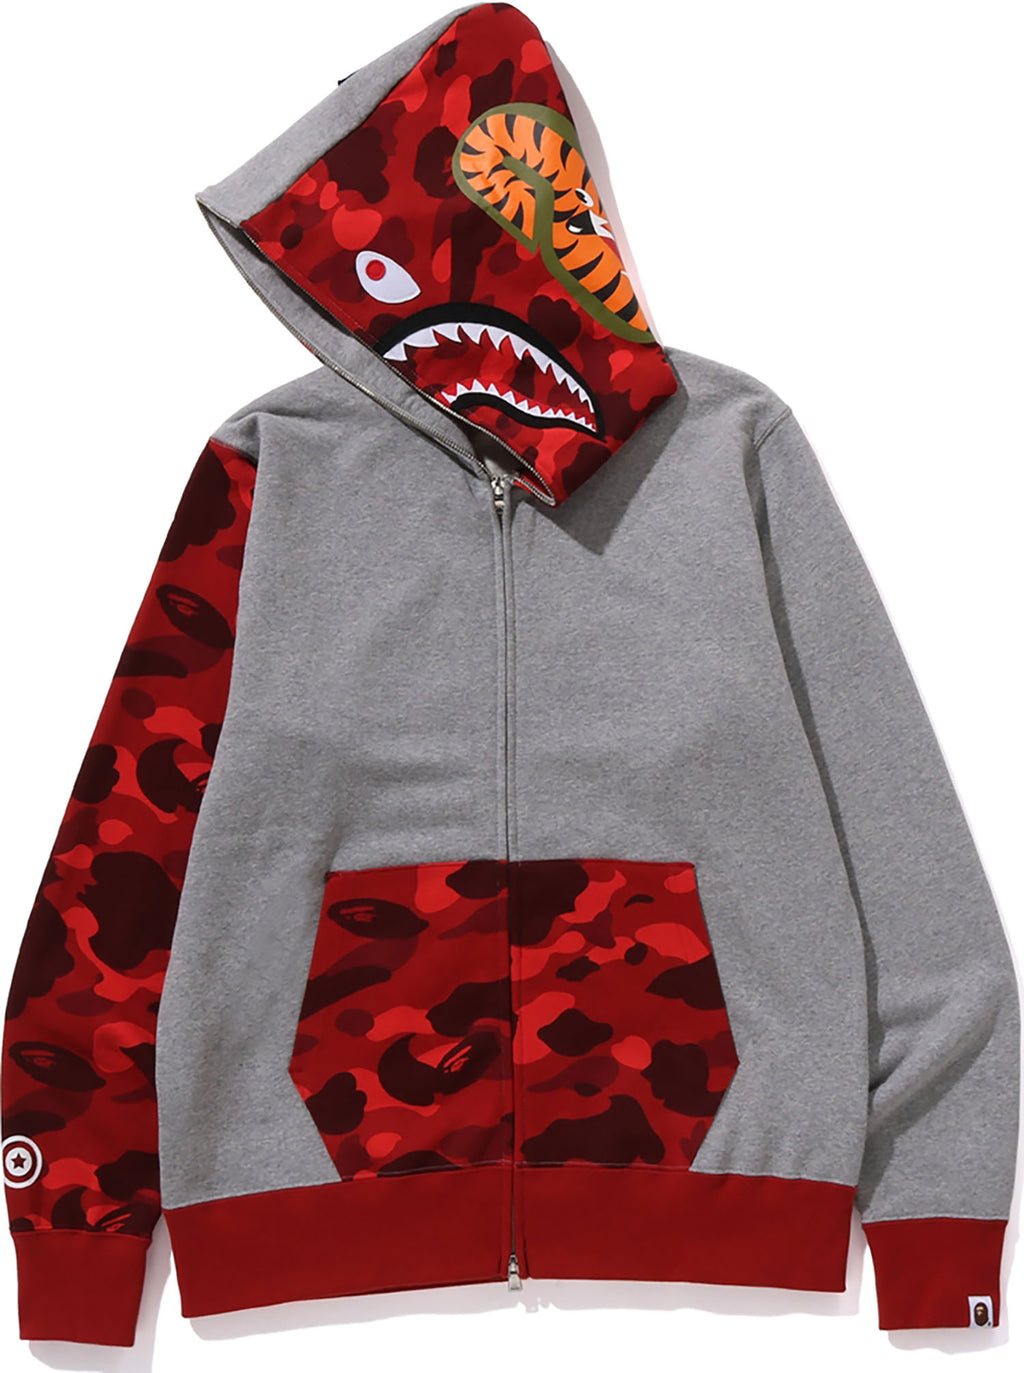 BAPE American Shark full zip hoodie Red A Bathing Ape Size S